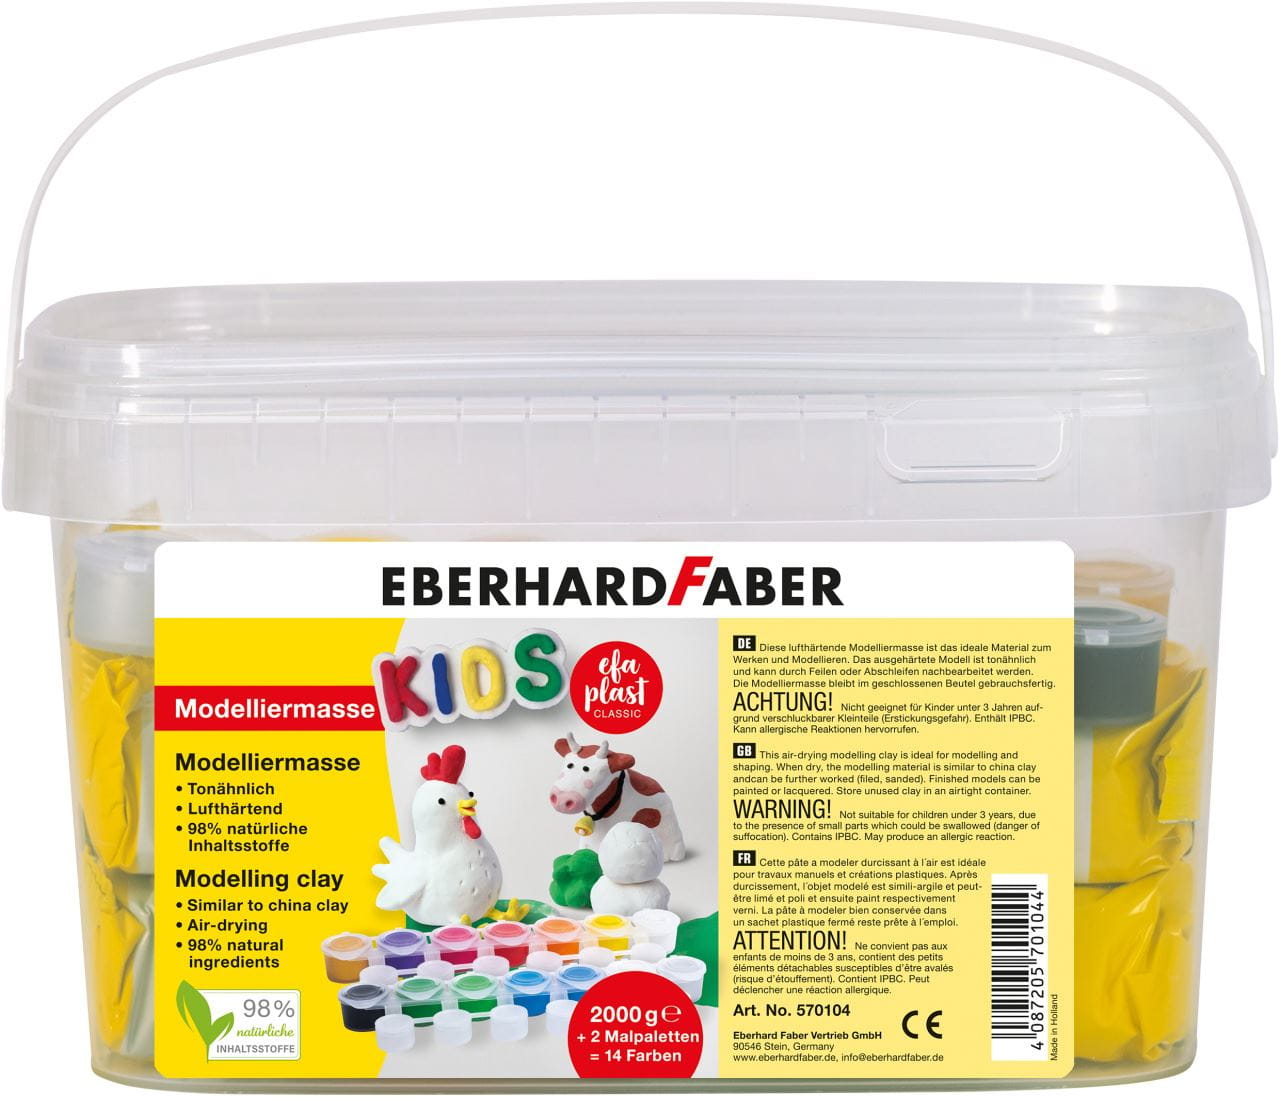 Eberhard-Faber - EFA Plast Kids, 2.000g white bucket + 14 paint pots